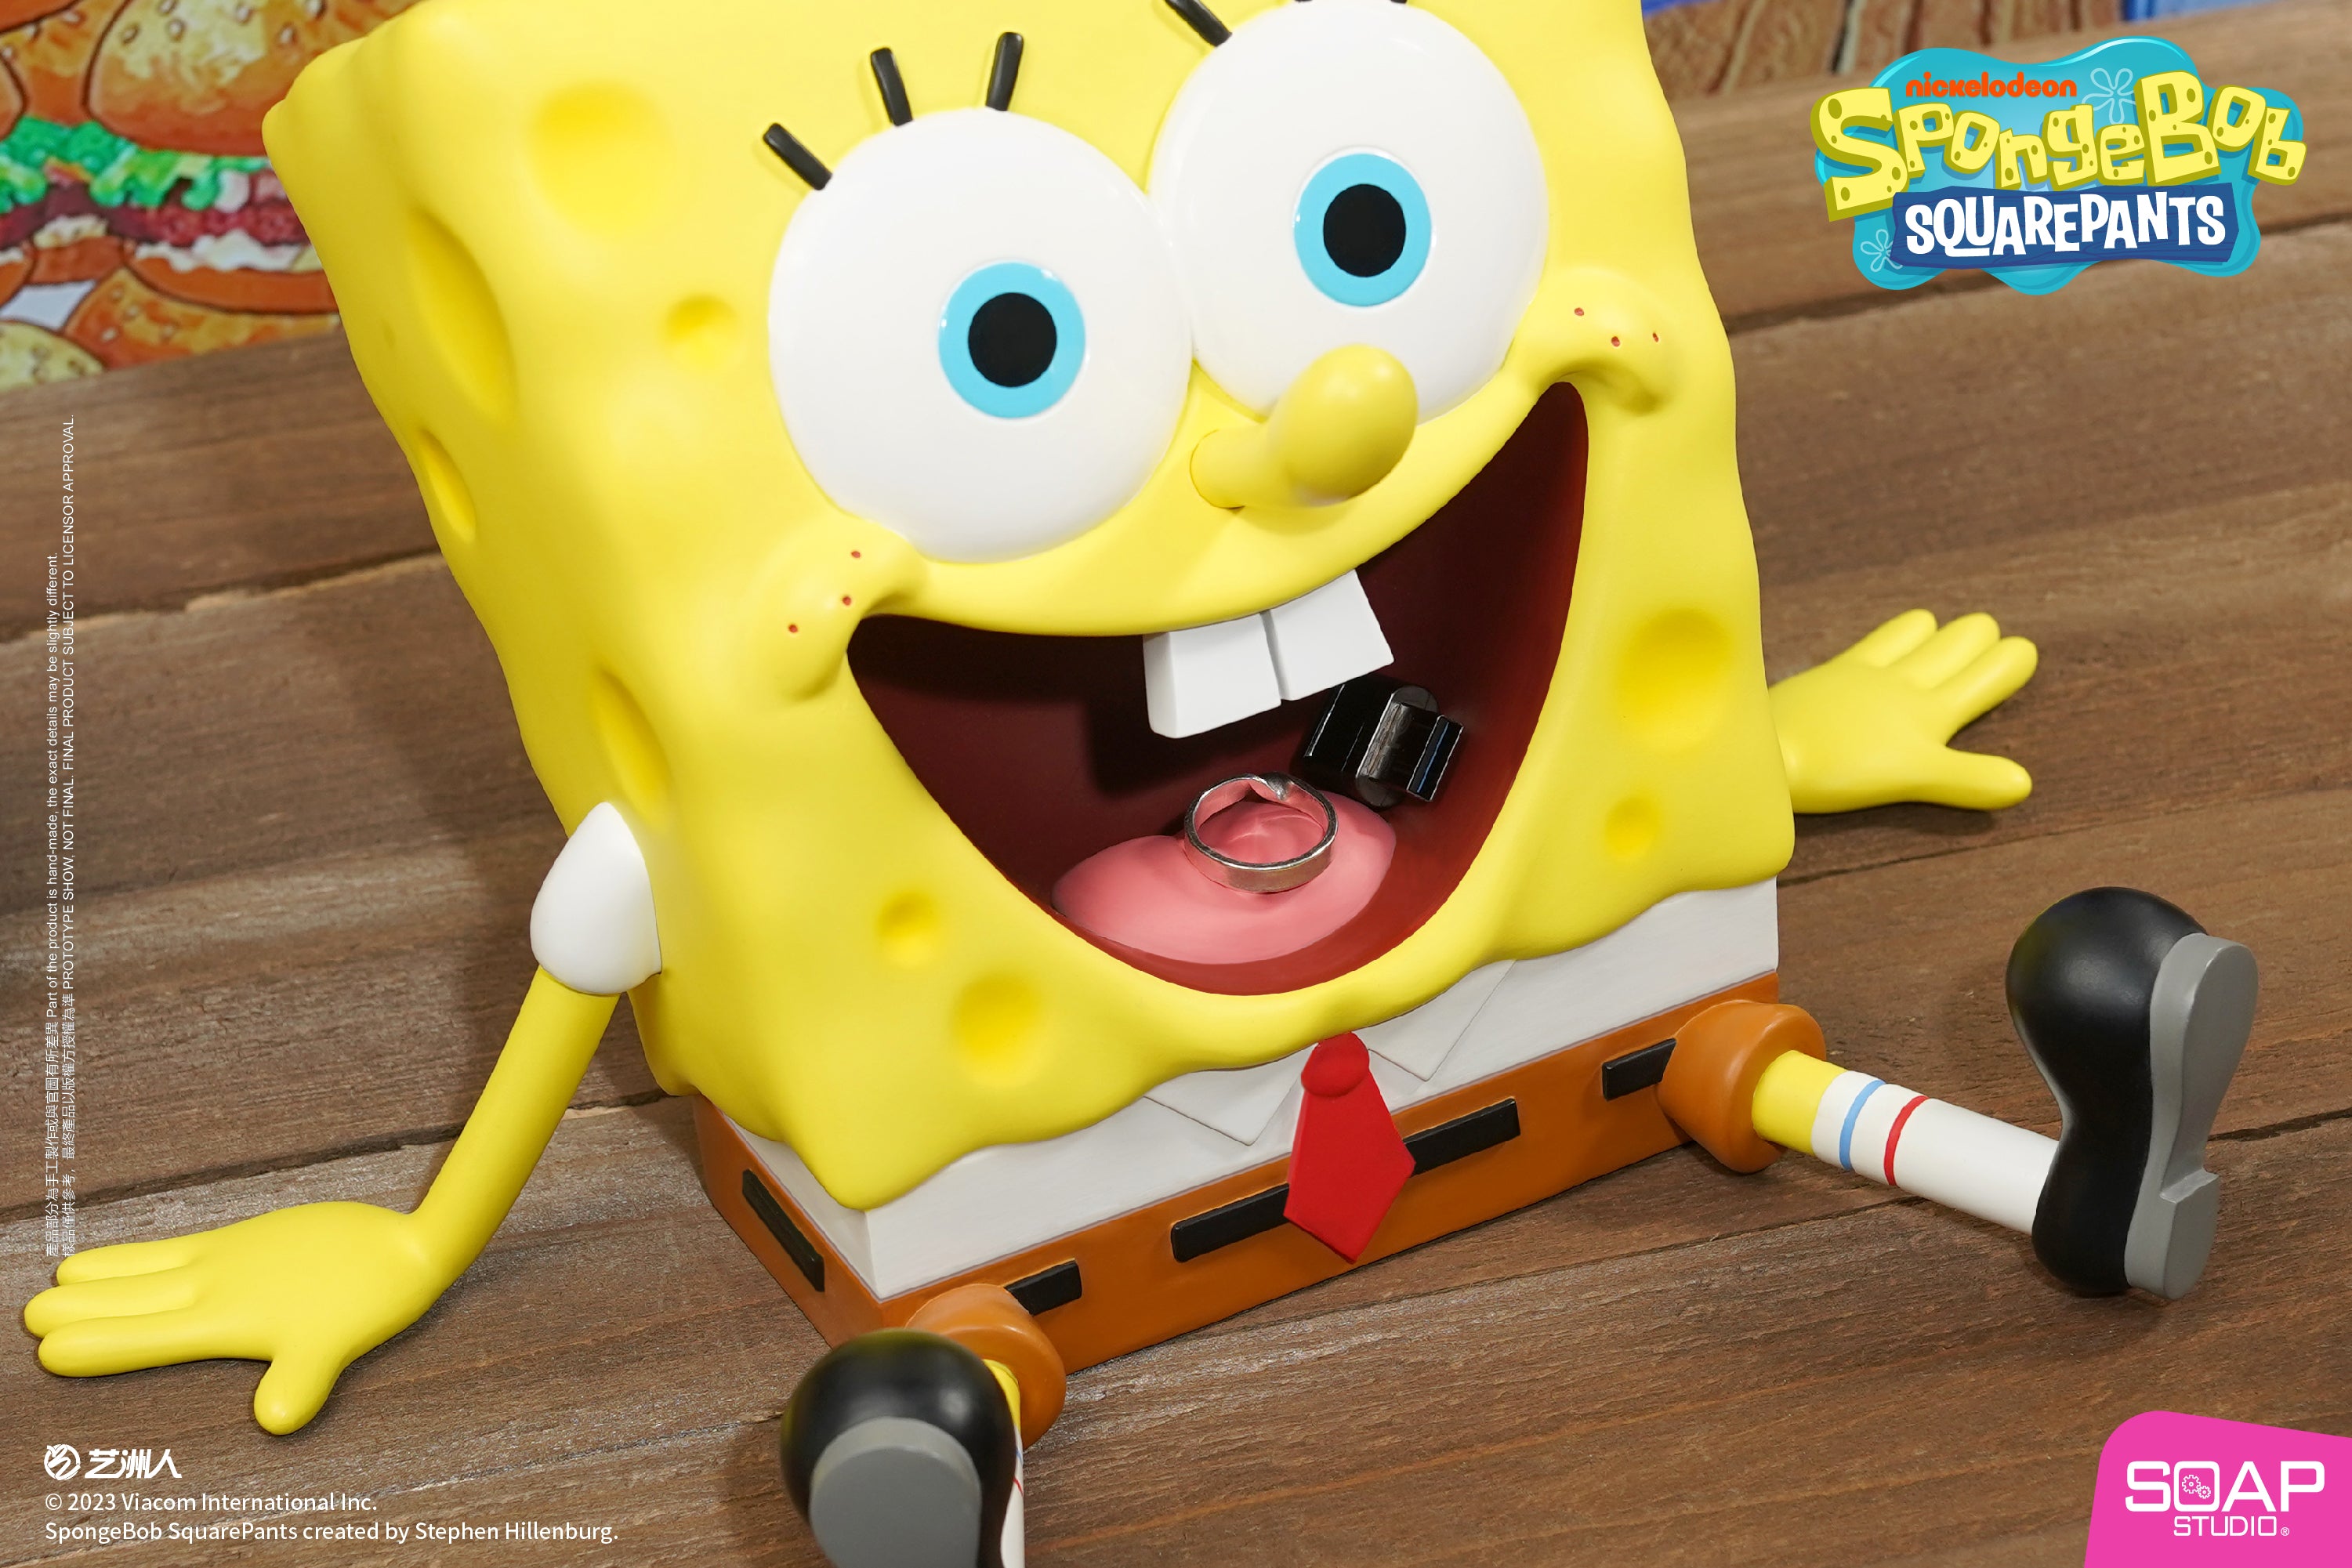 Soap Studio NS009 SpongeBob SquarePants - Big Eater SpongeBob Storage Statue